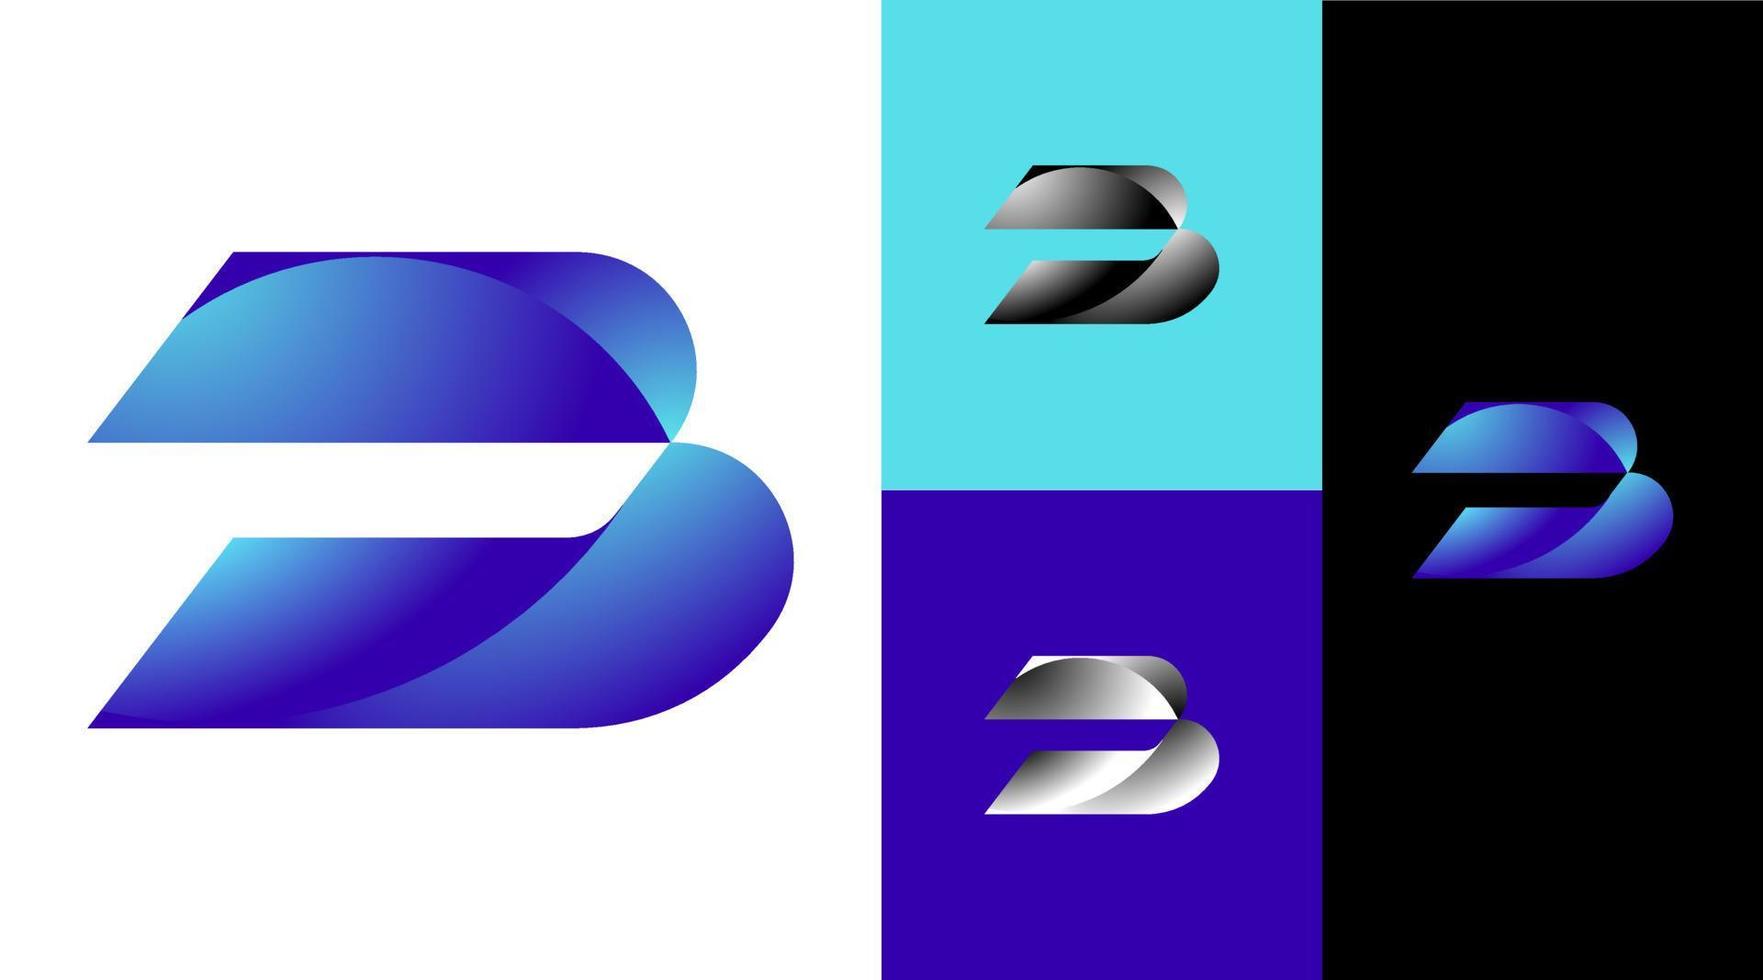 b conceito de design de logotipo de tecnologia aerodinâmica de ar monograma vetor